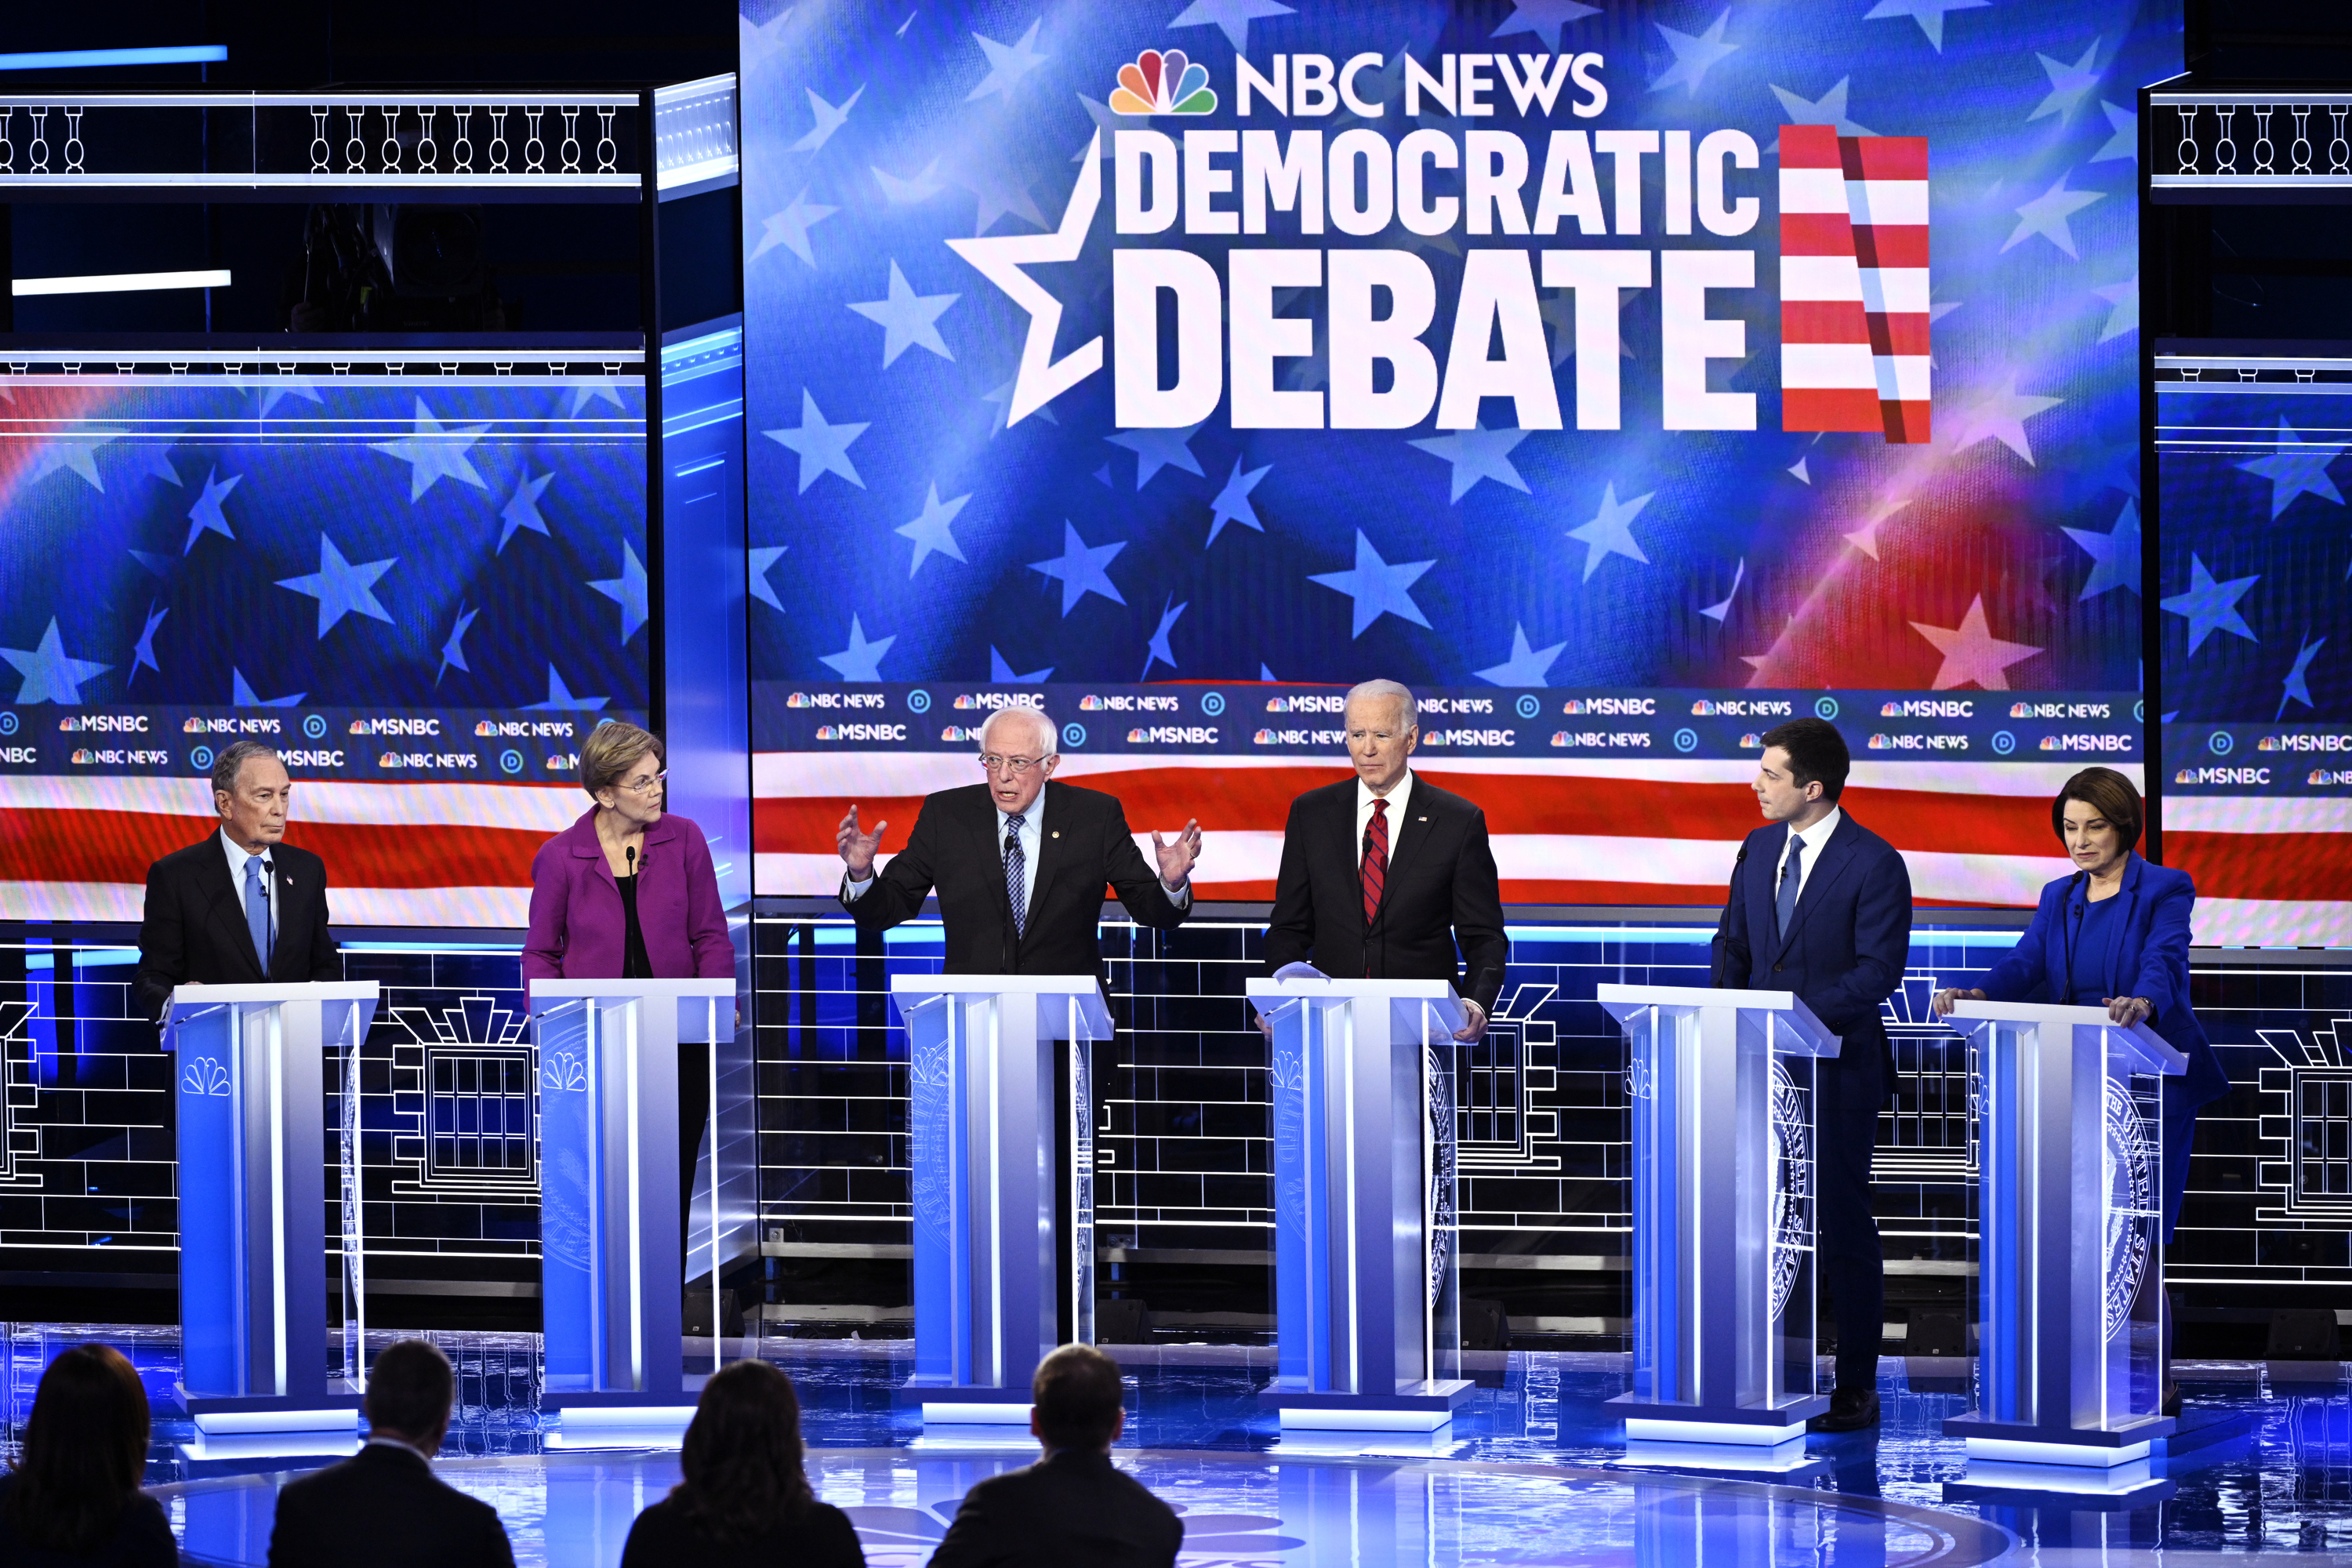 Six candidates — Mike Bloomberg, Elizabeth Warren, Bernie Sanders, Joe Biden, Pete Buttigieg, and Amy Klobuchar — at a Democratic debate onstage behind podiums with an NBC News backdrop